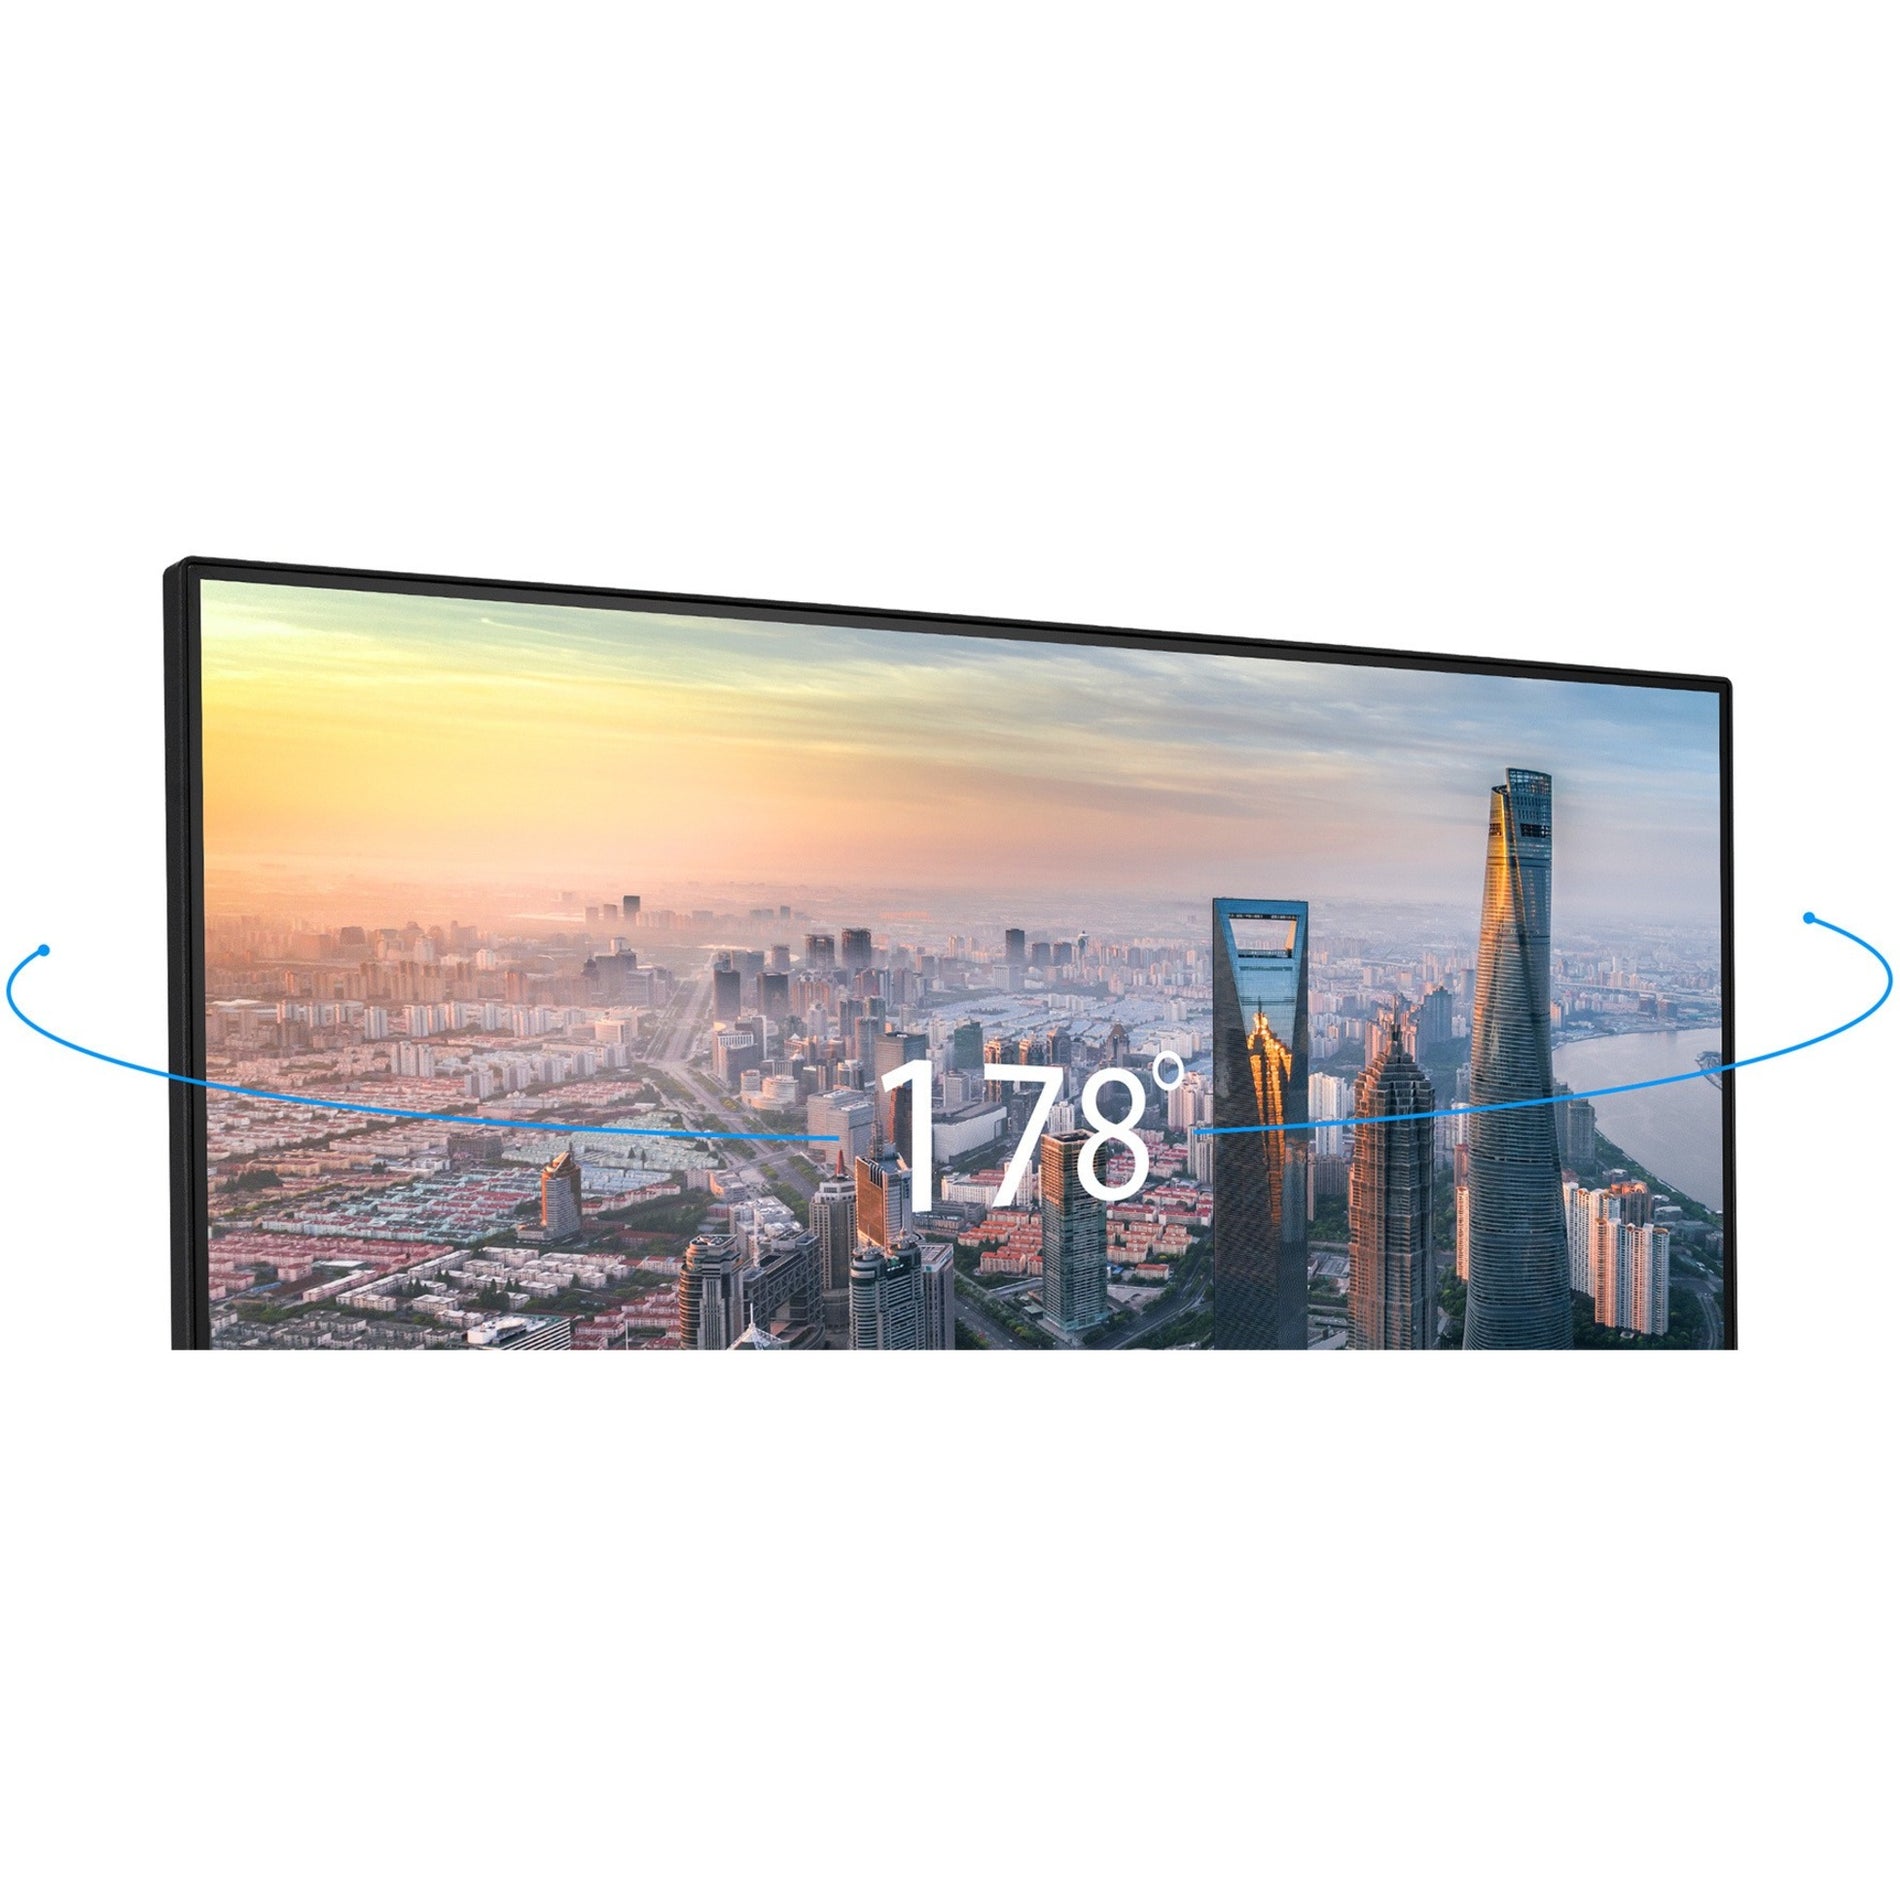 Asus VA24EQSB 23.8" Full HD LCD Monitor - 16:9, Adaptive Sync, TCO Certified